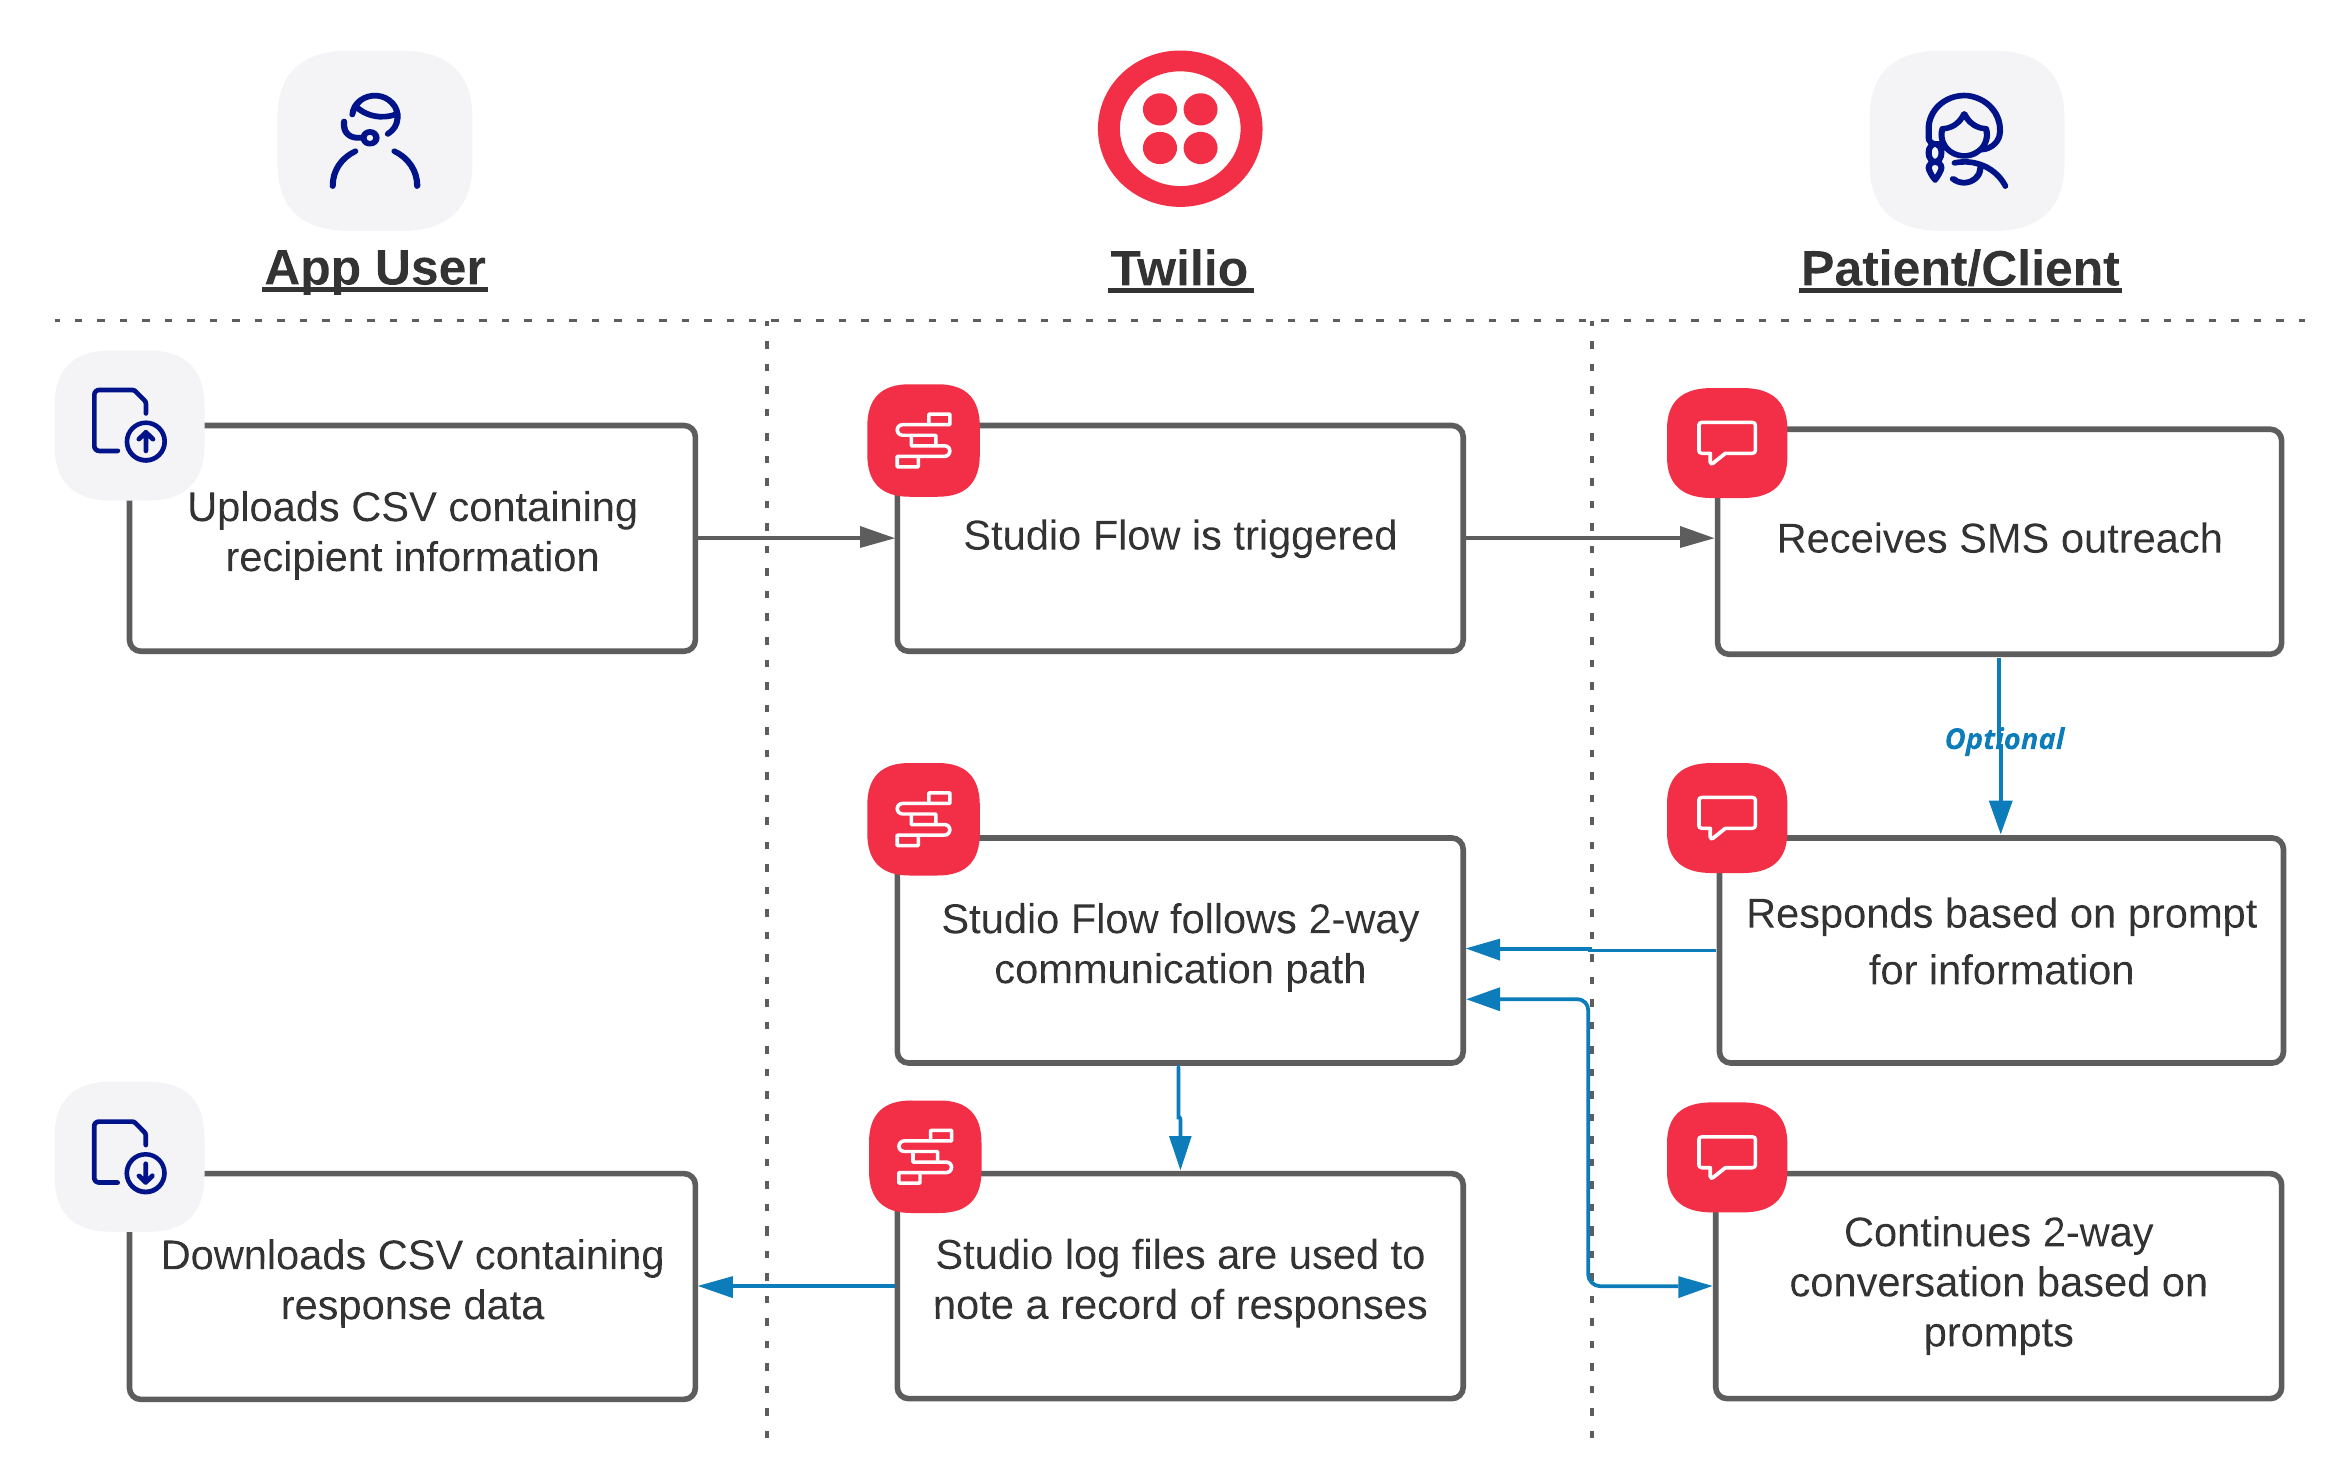 Twilio HLS App Demonstration Workflow